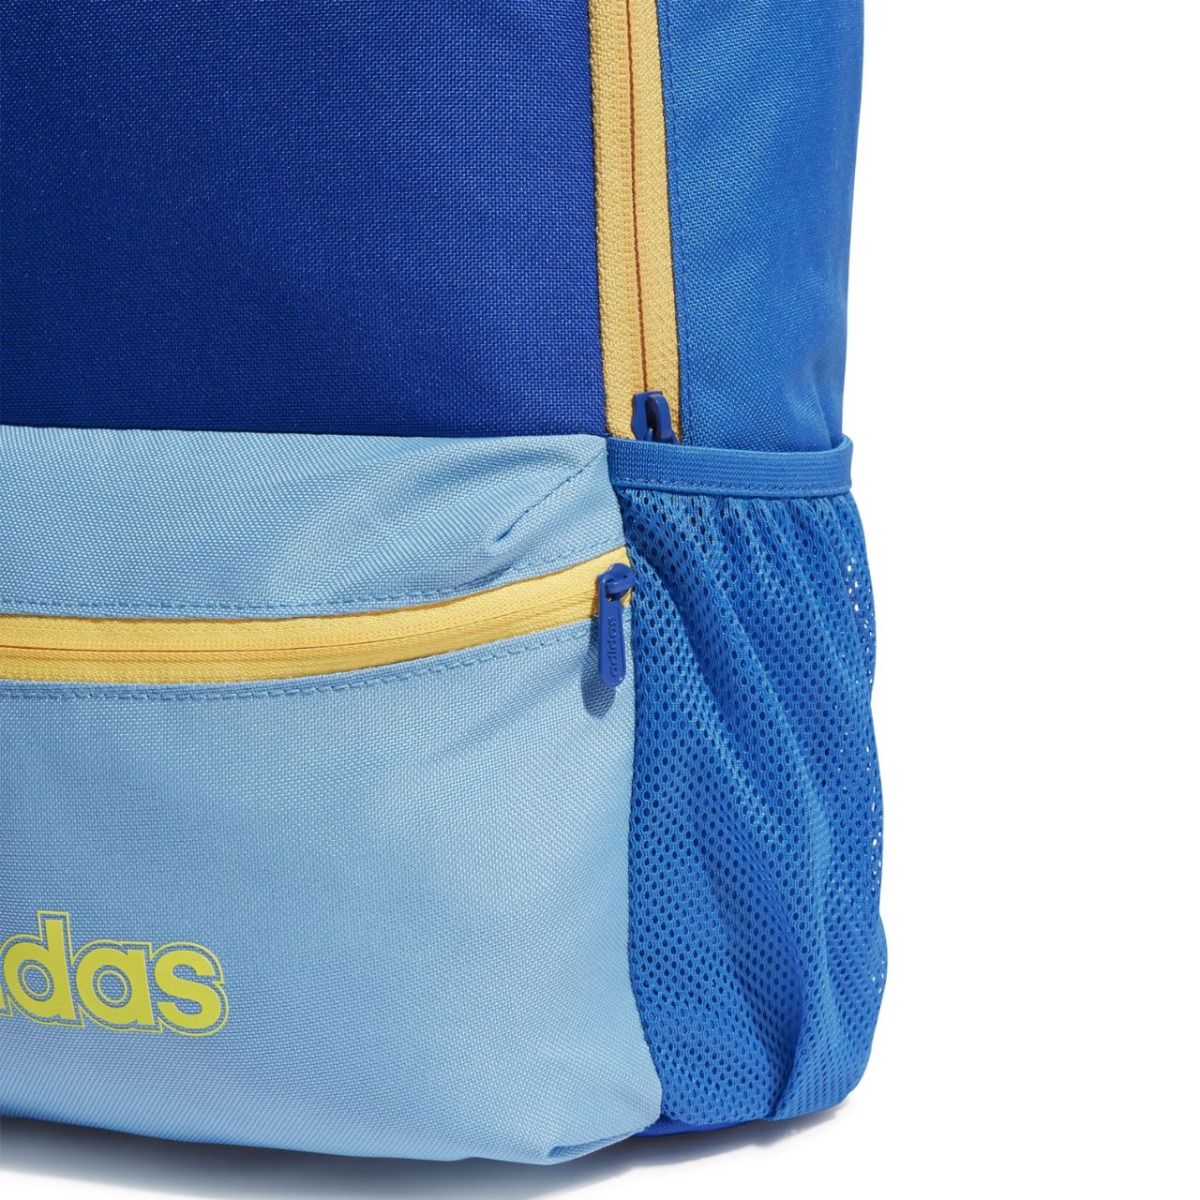 adidas Batoh Graphic Backpack IR9752